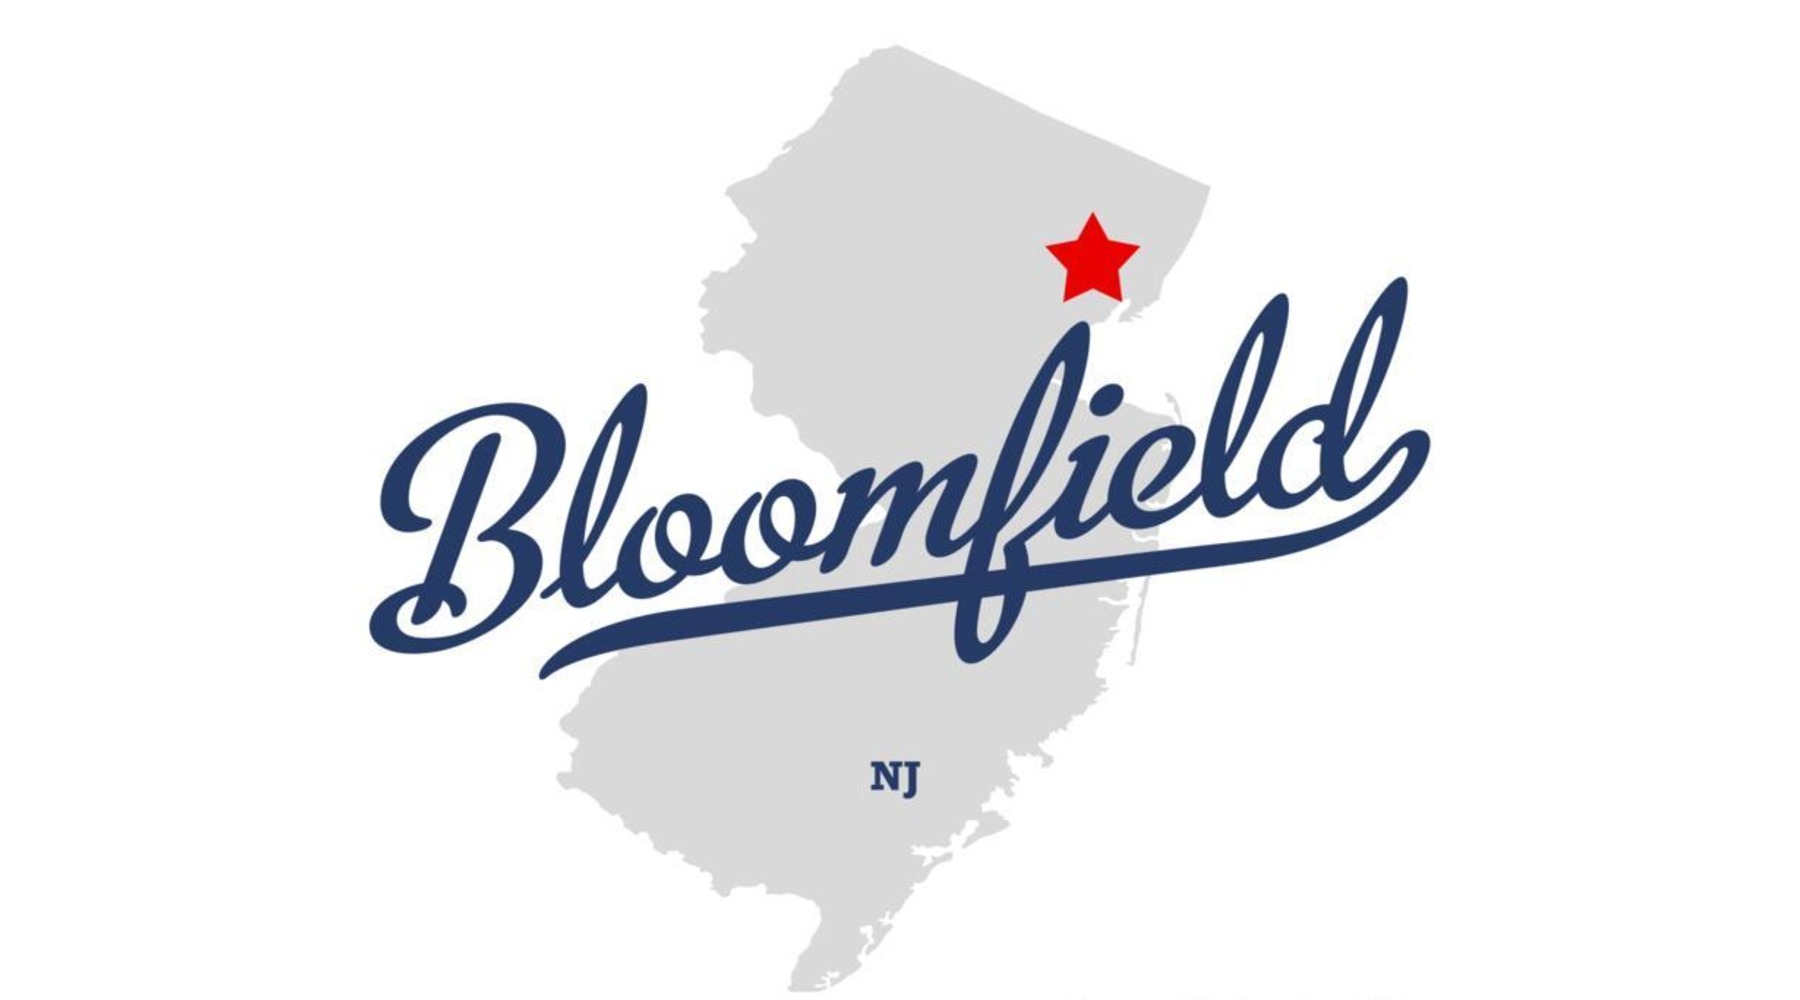 Bloomfield, 07003